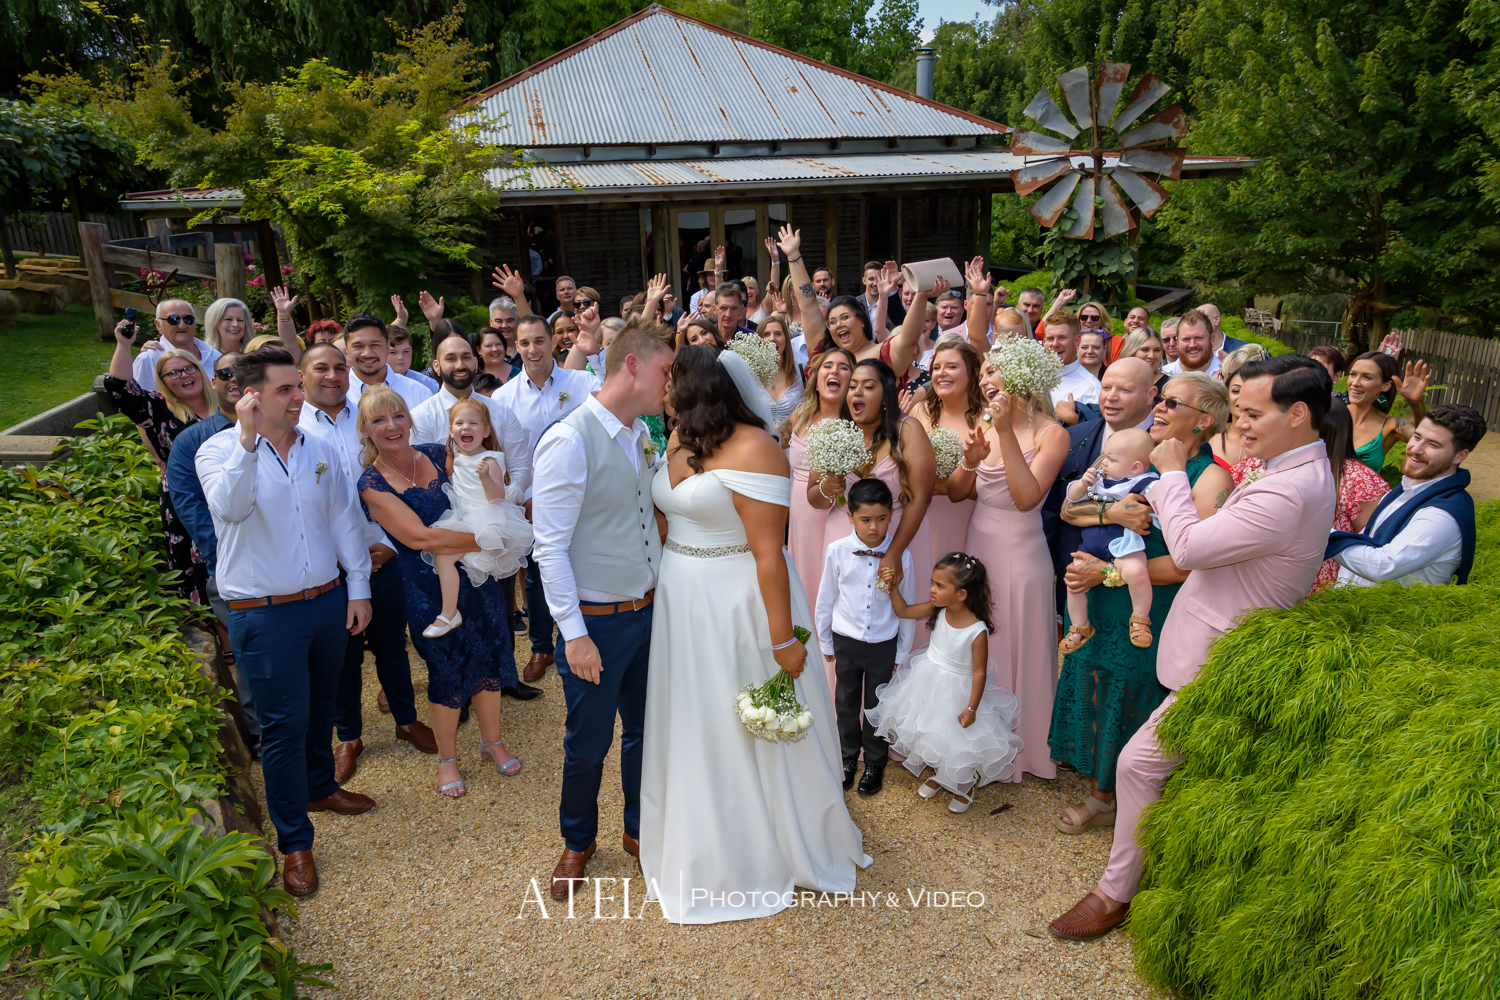 , Gum Gully Farm Wedding Photography by ATEIA Photography &#038; Video